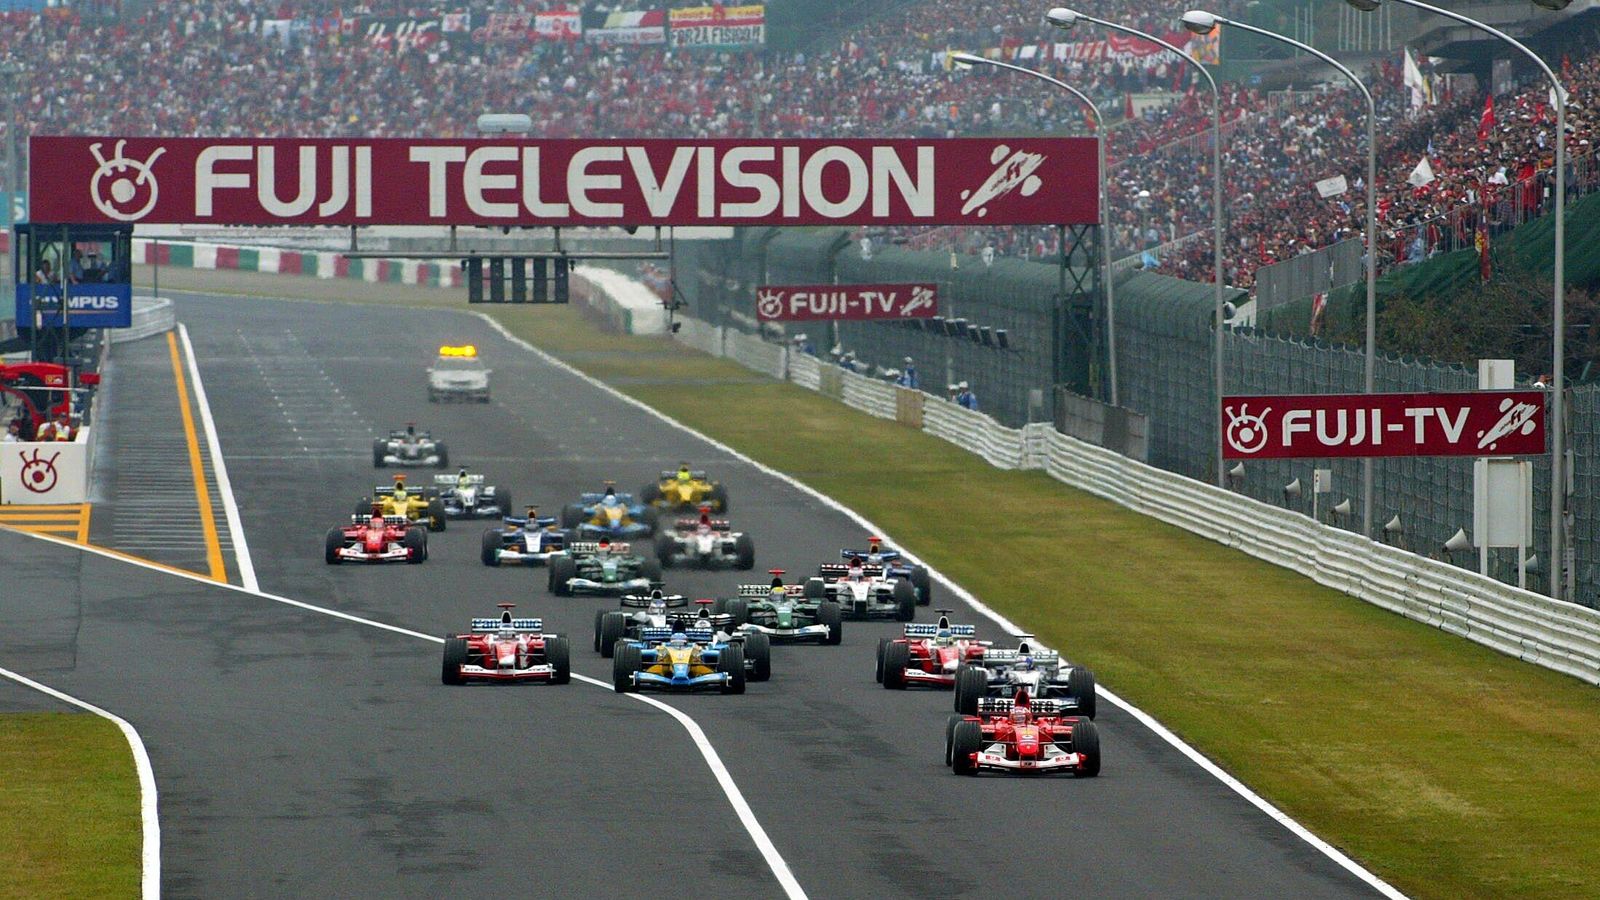 Formel 1 News Michael Schumacher und Suzuka 2003 live auf Sky Sport F1 Formel 1 News Sky Sport